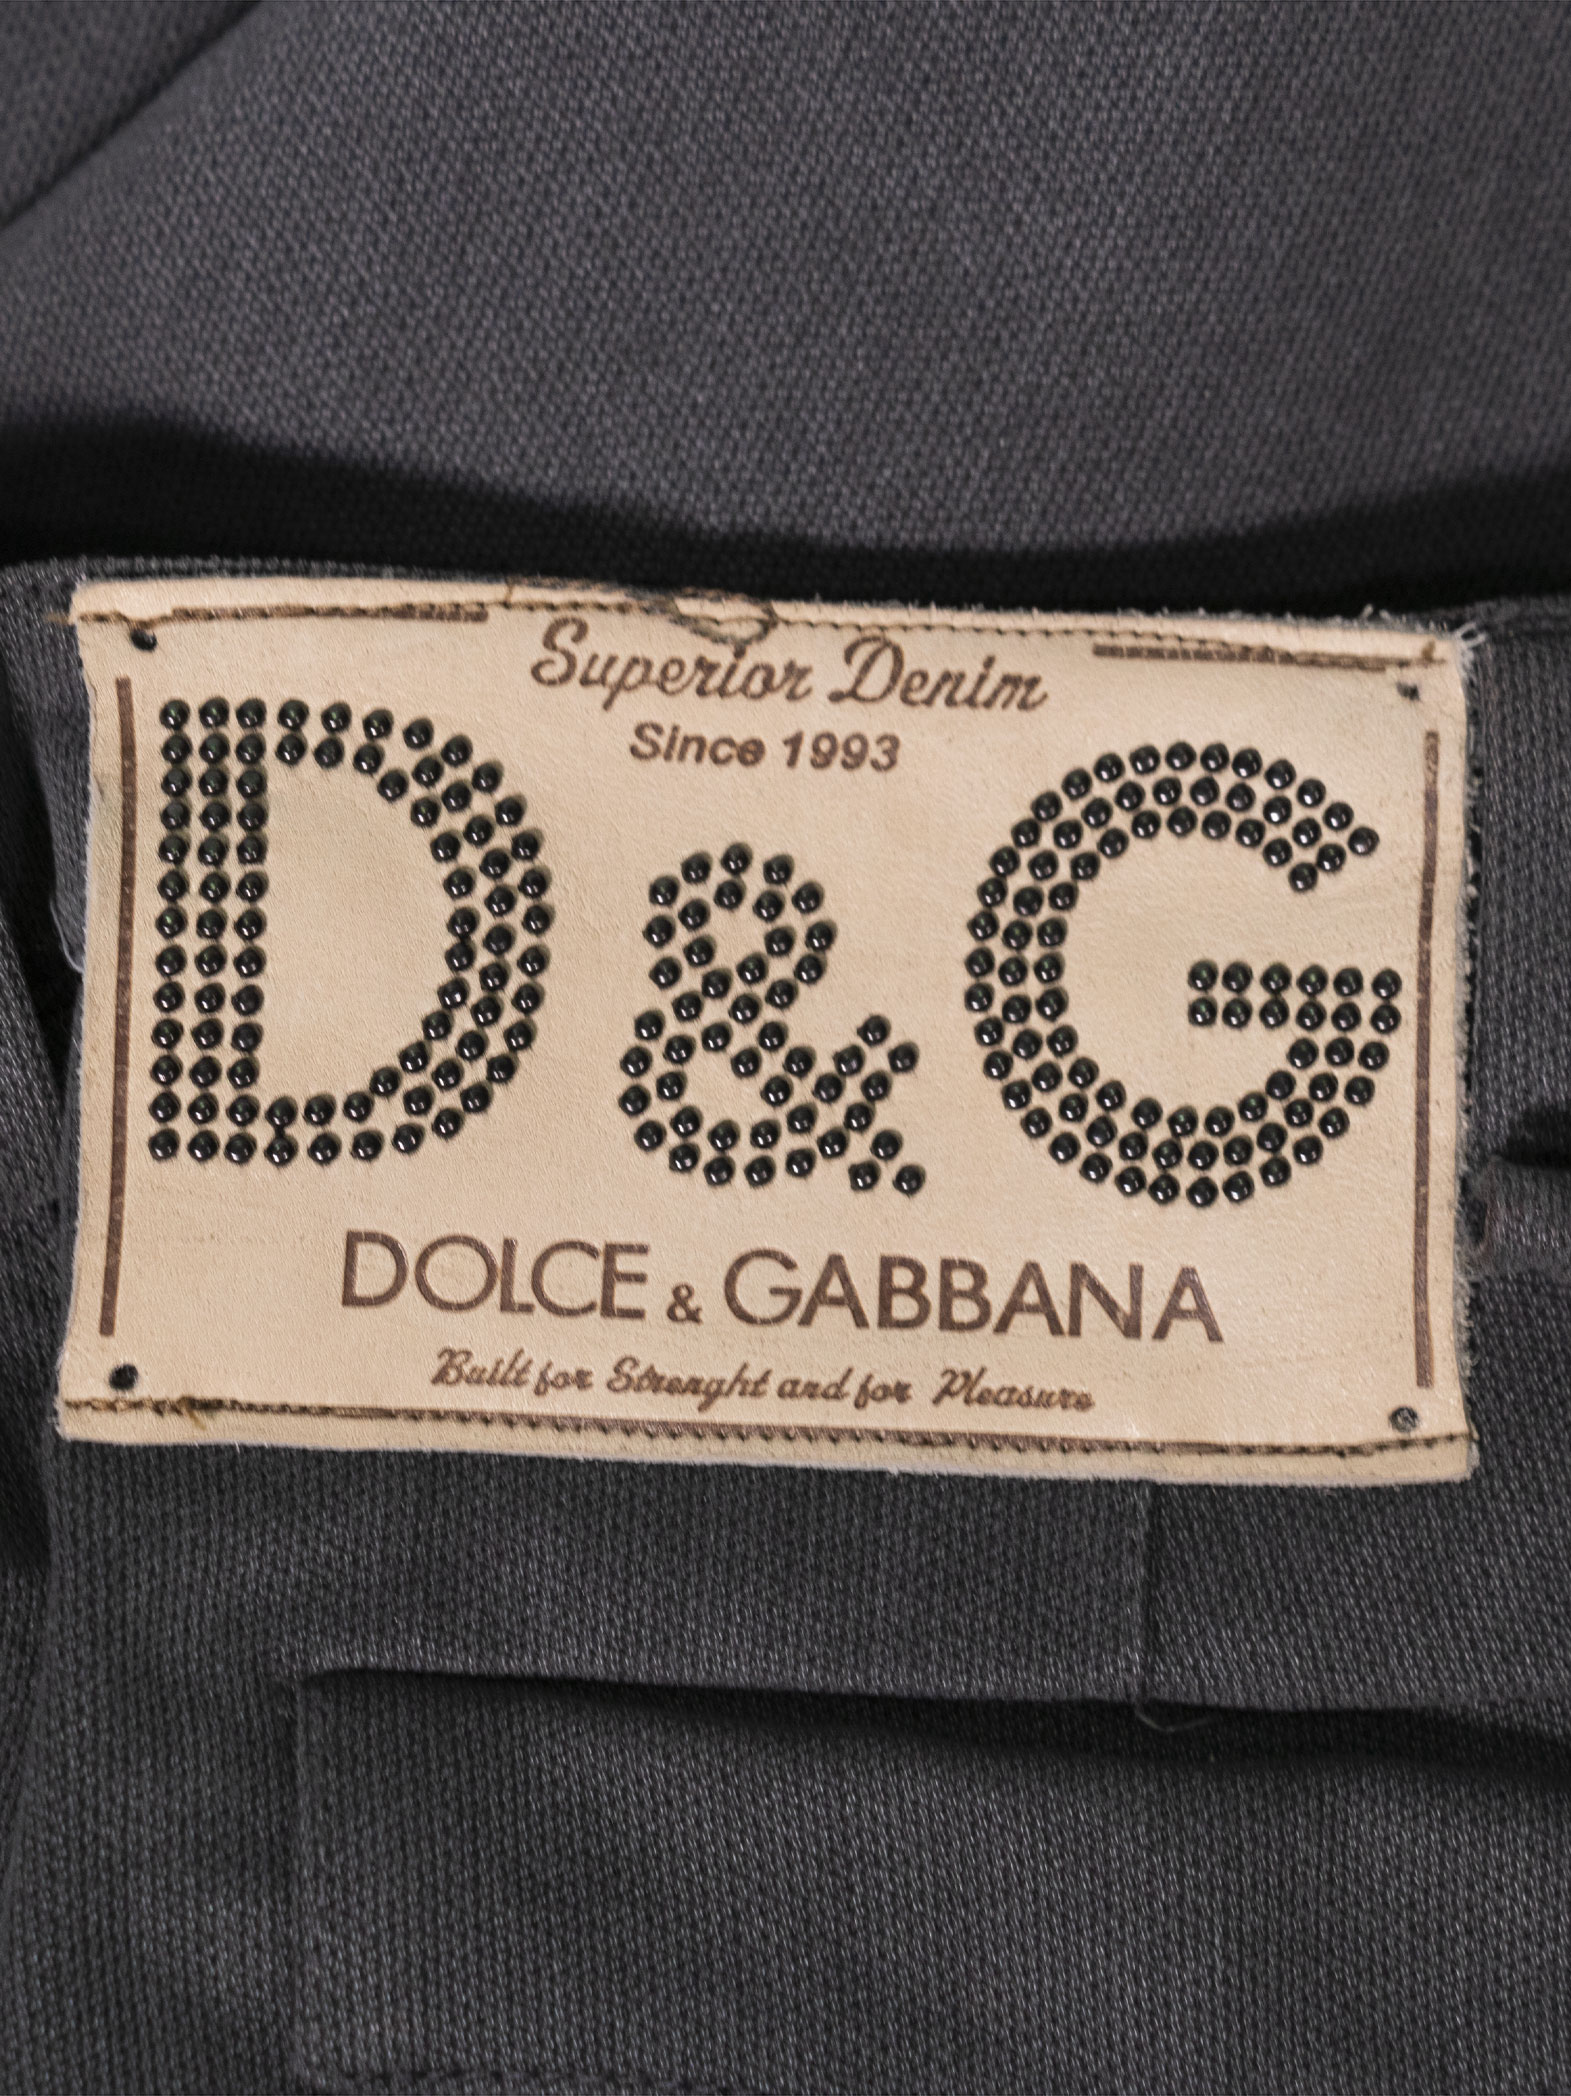 Dolce e Gabbana - Pantaloni baggy 2000